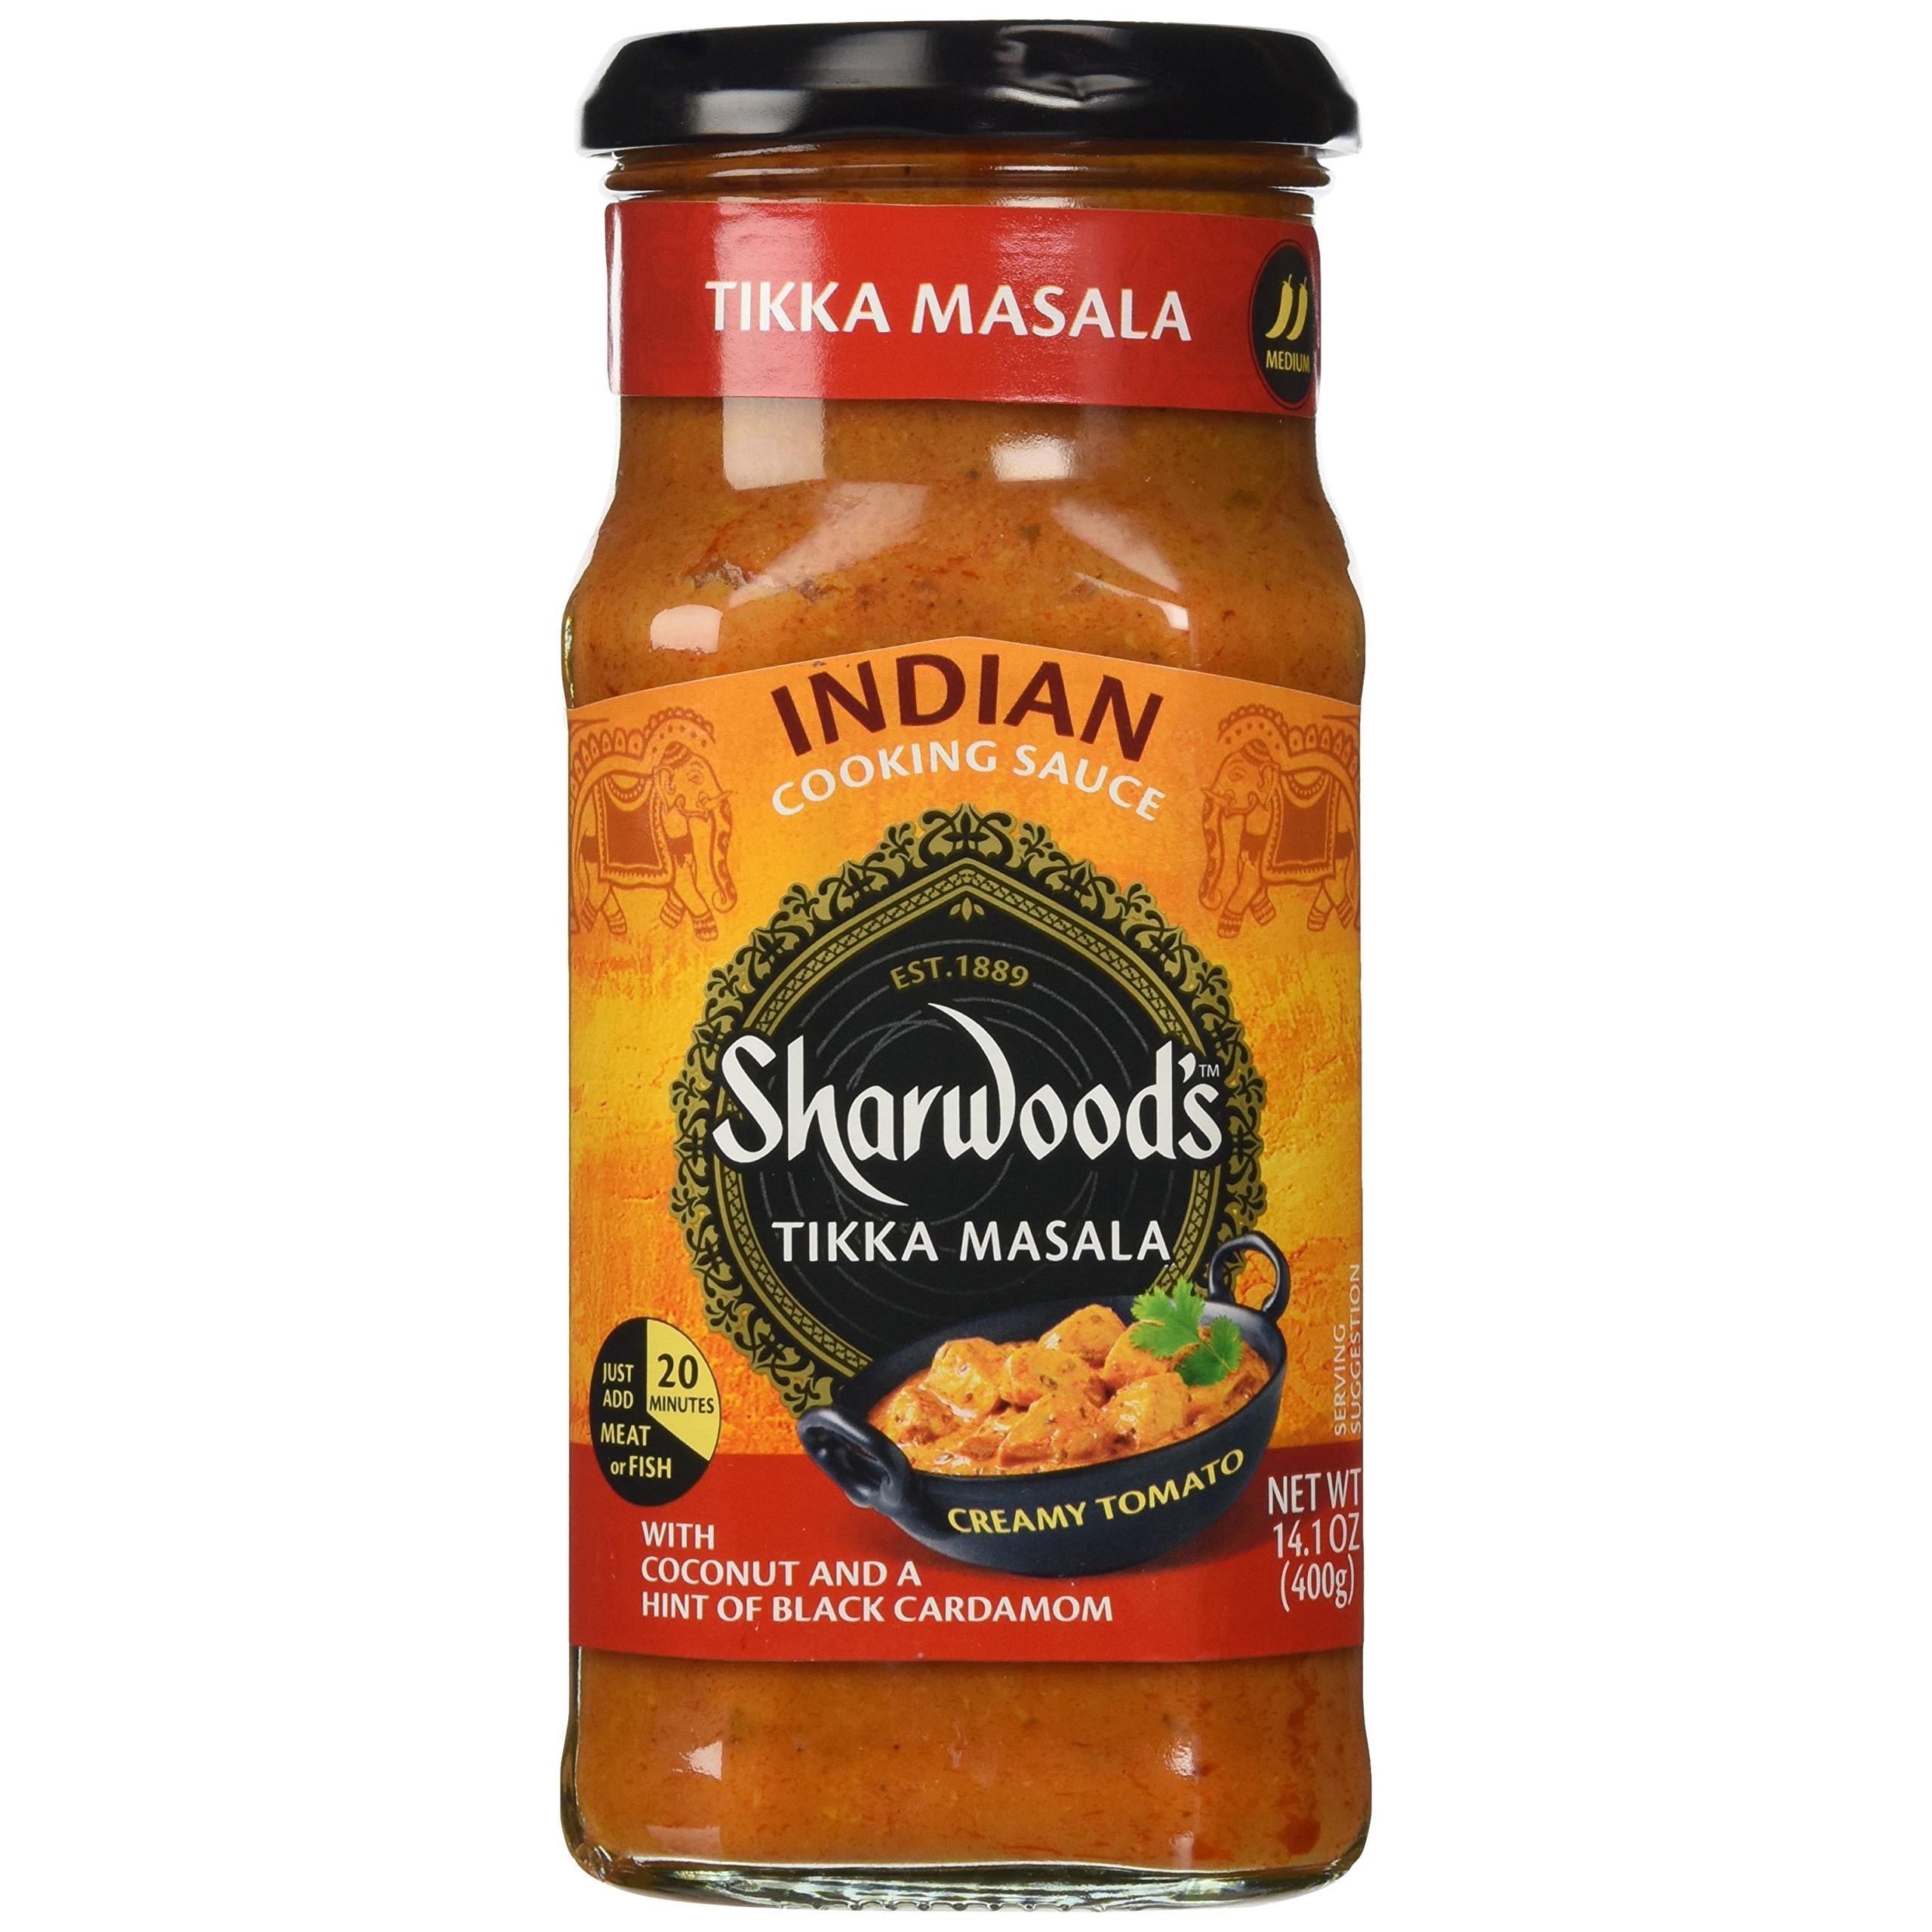 Sharwoods Sharwood's Tikka Masala Curry Sauce 14.8oz (420g)